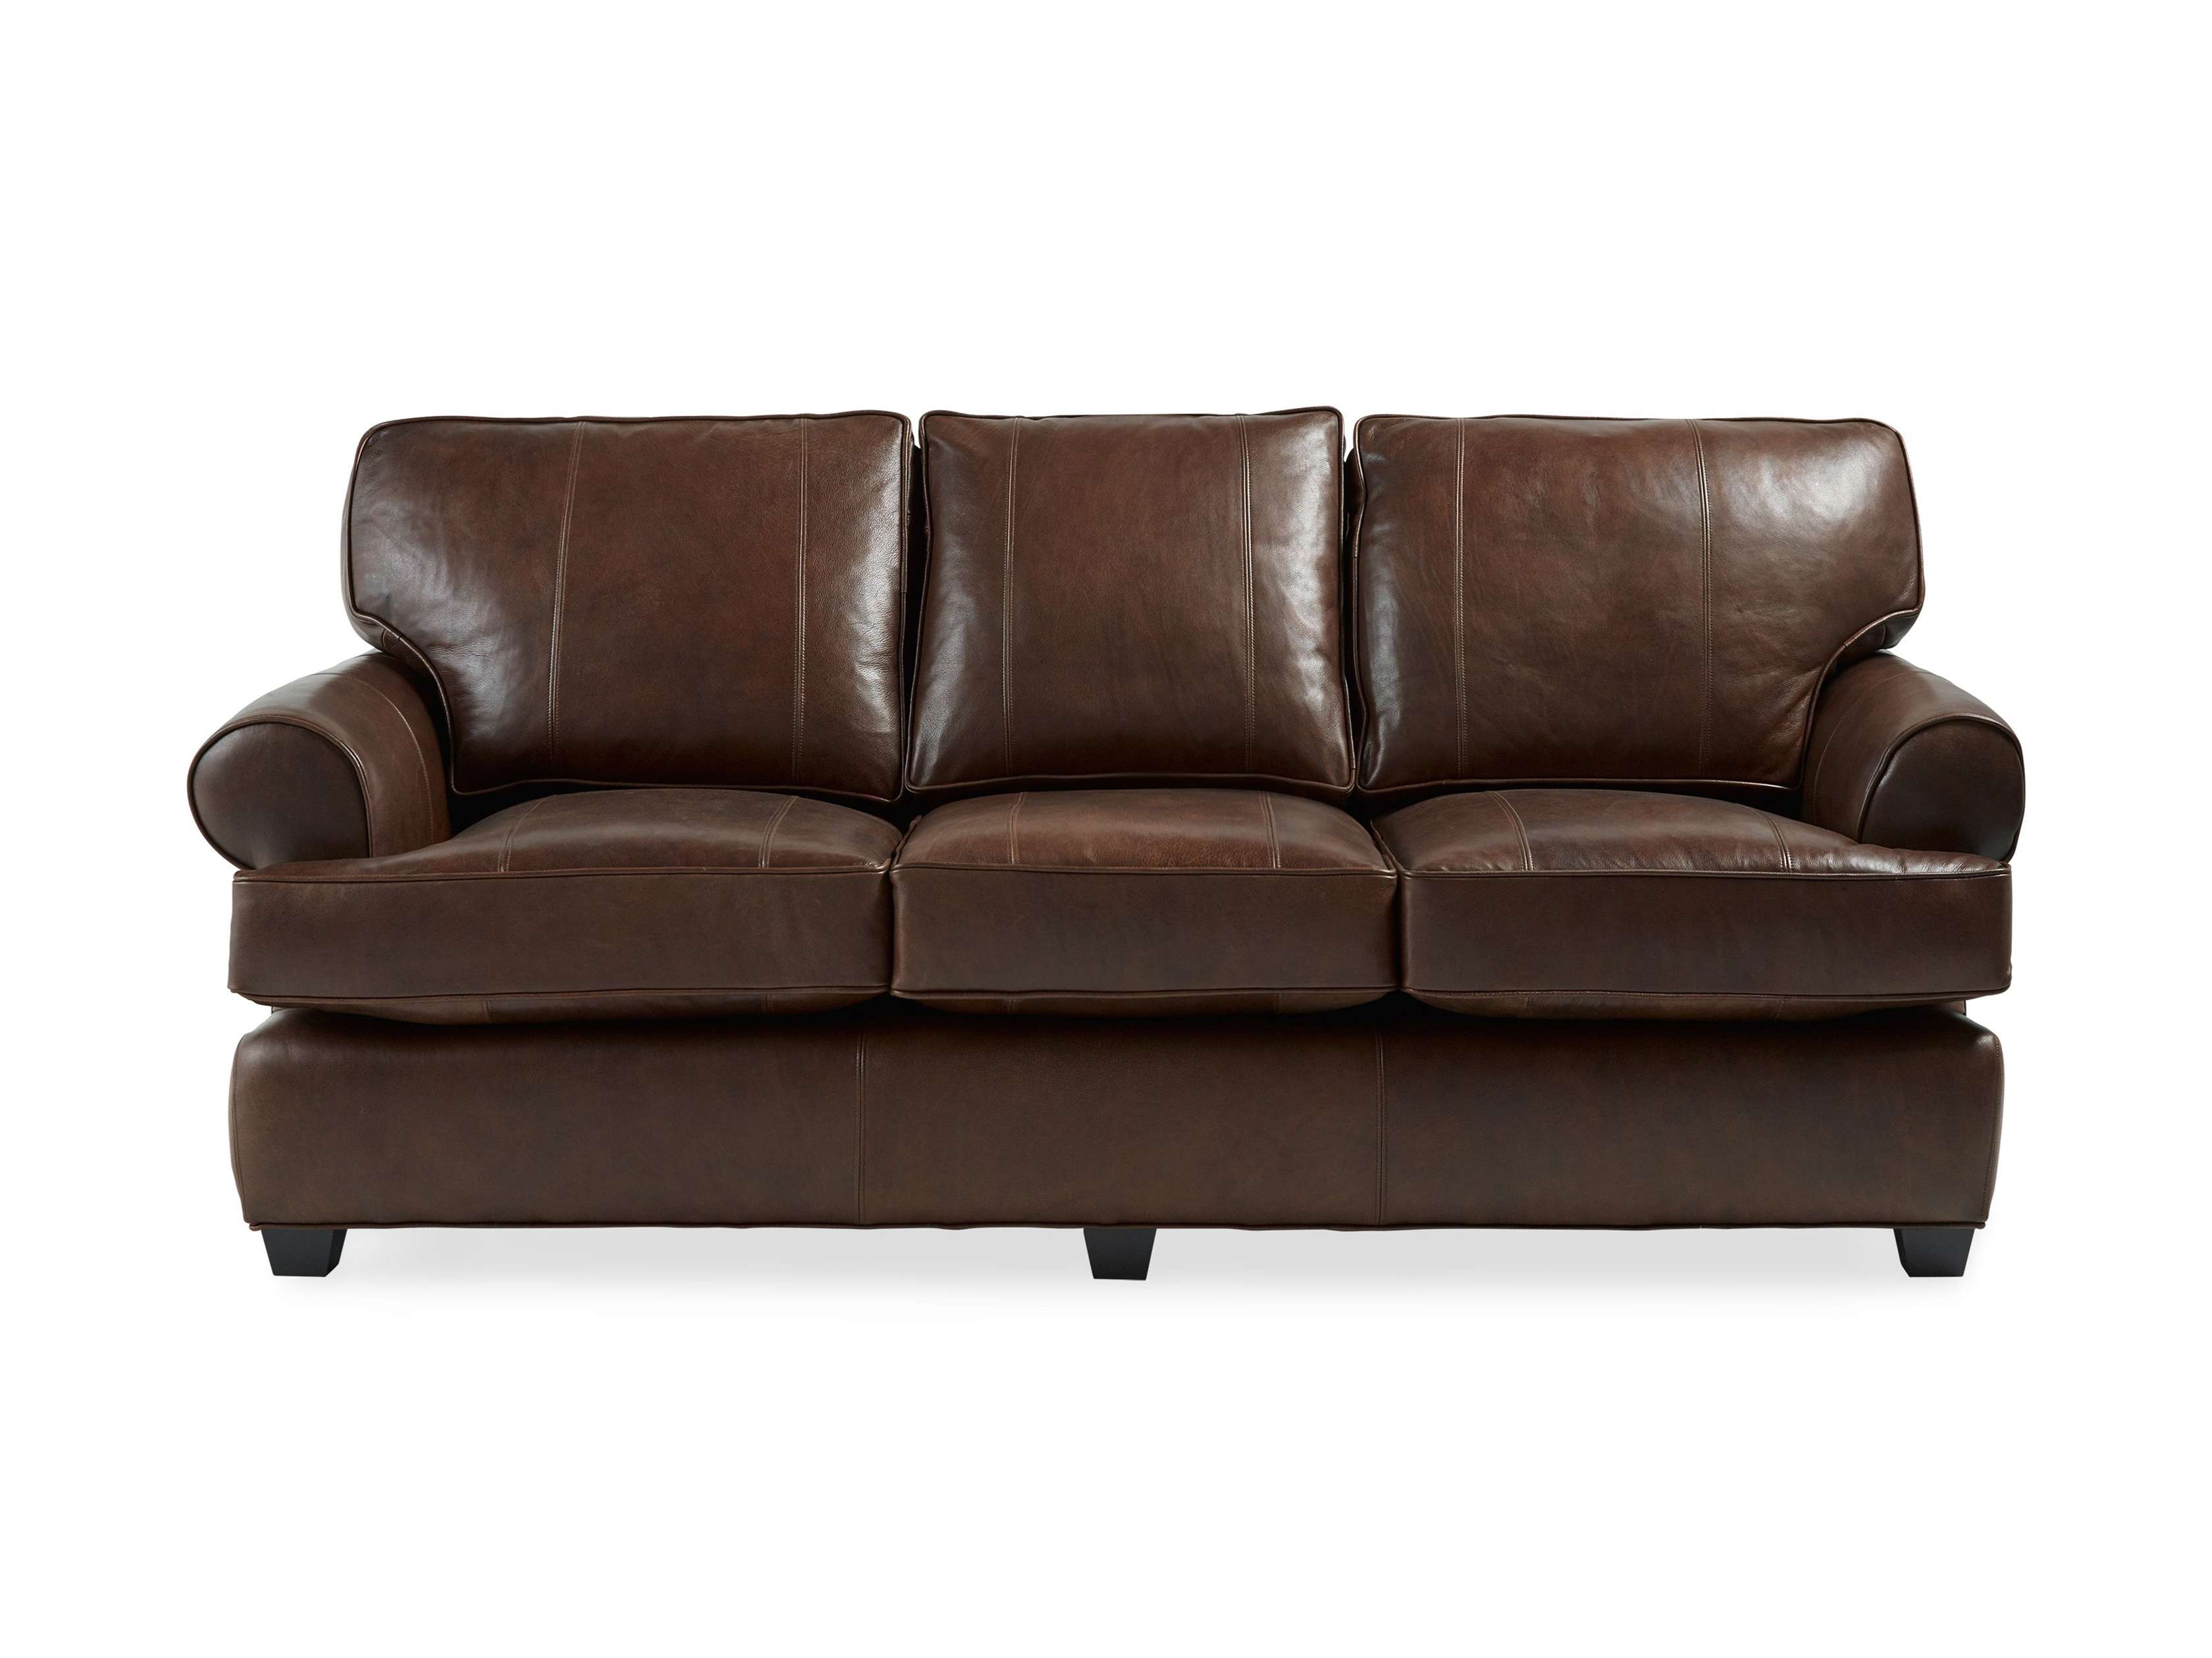 Hadley Leather Sofa Arhaus, Chocolate Brown Leather Sofa Bed